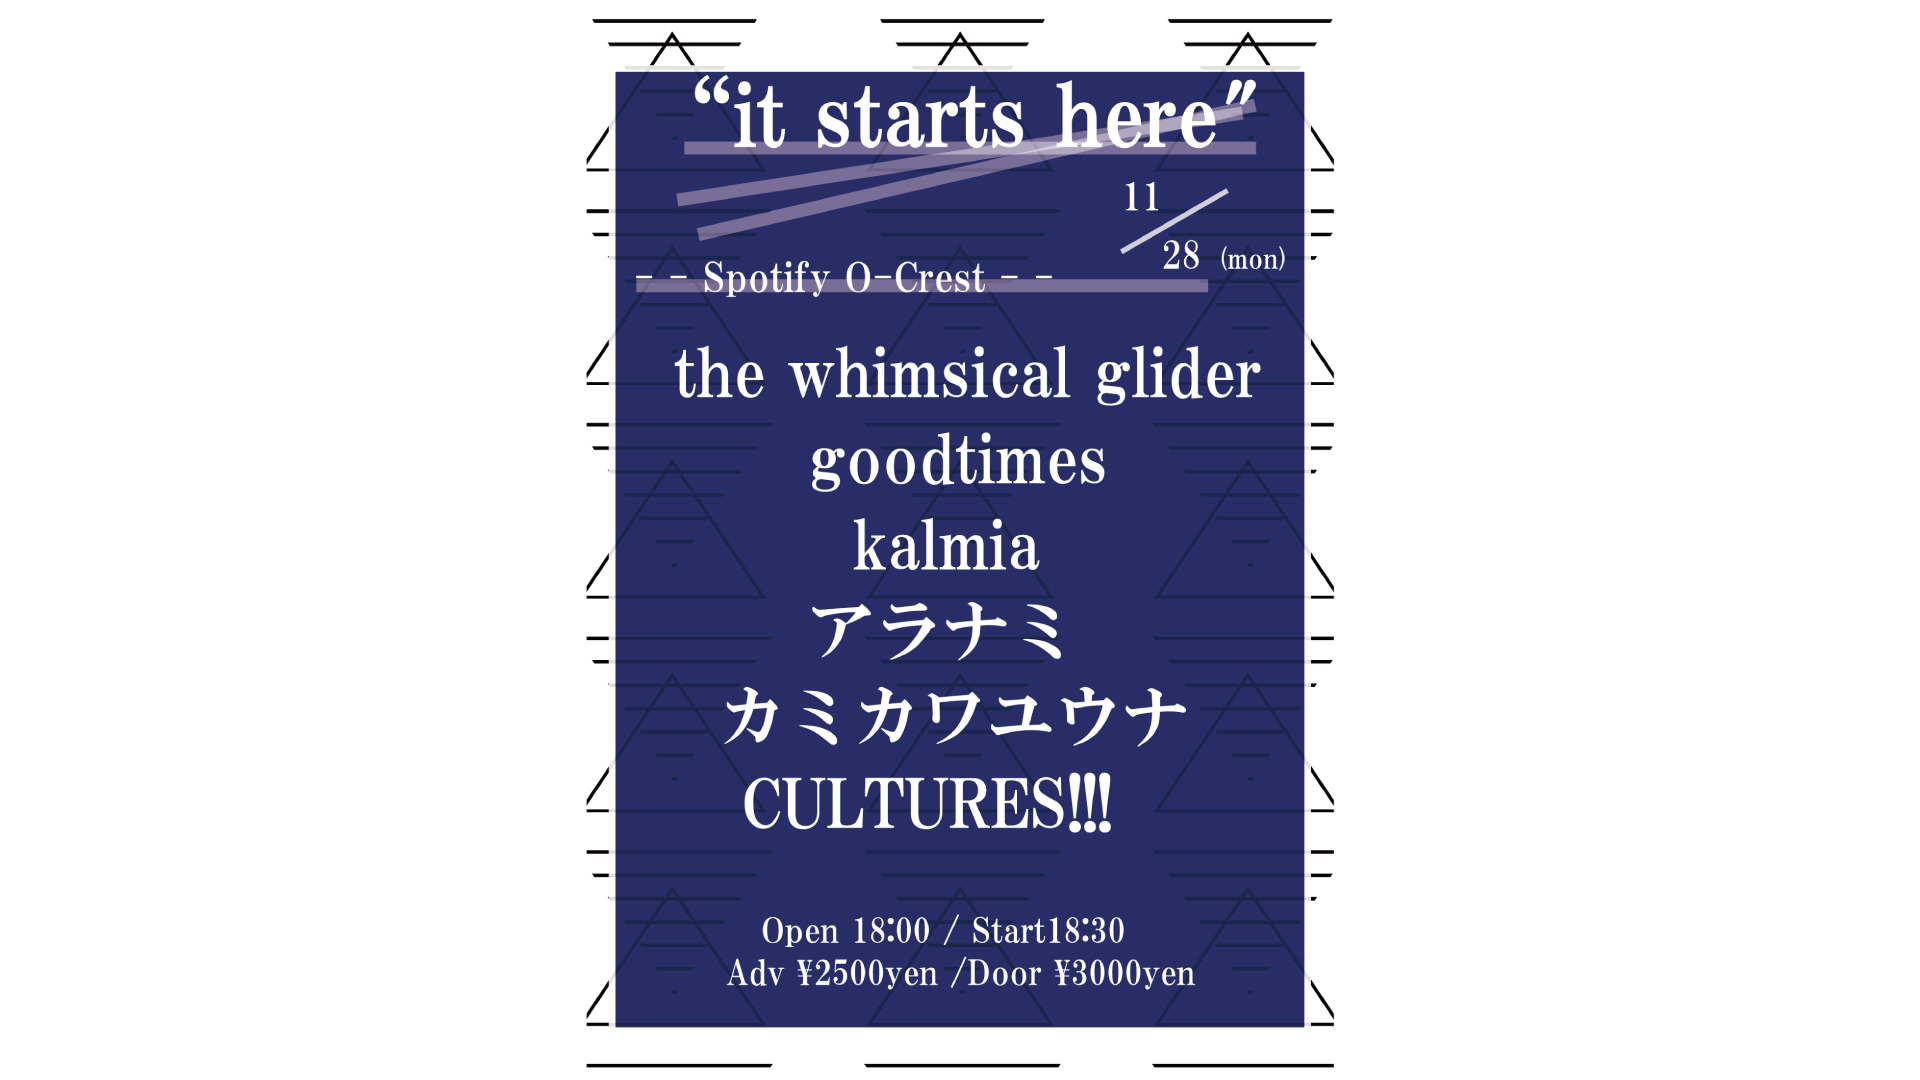 the whimsical glider goodtimes kalmia アラナミ カミカワユウナ CULTURES!!! _22/11/29